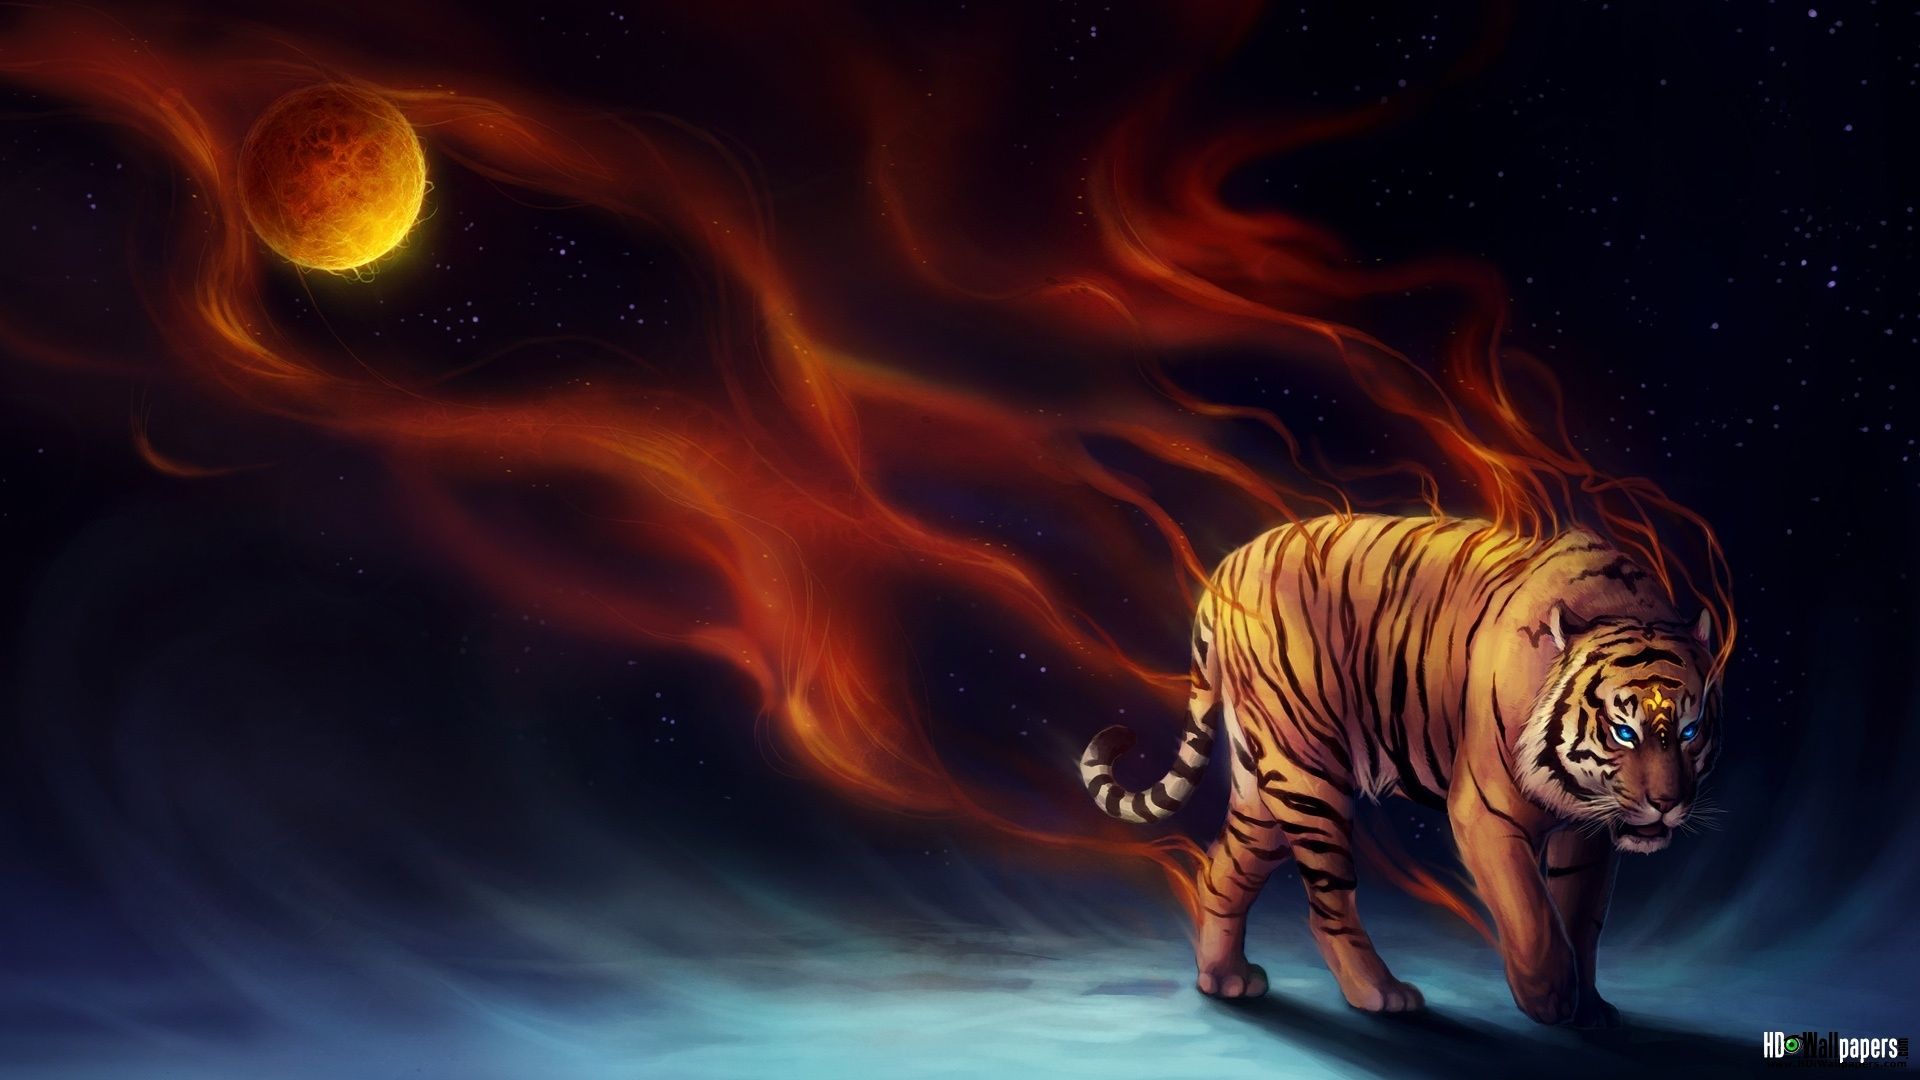 Tiger Backgrounds